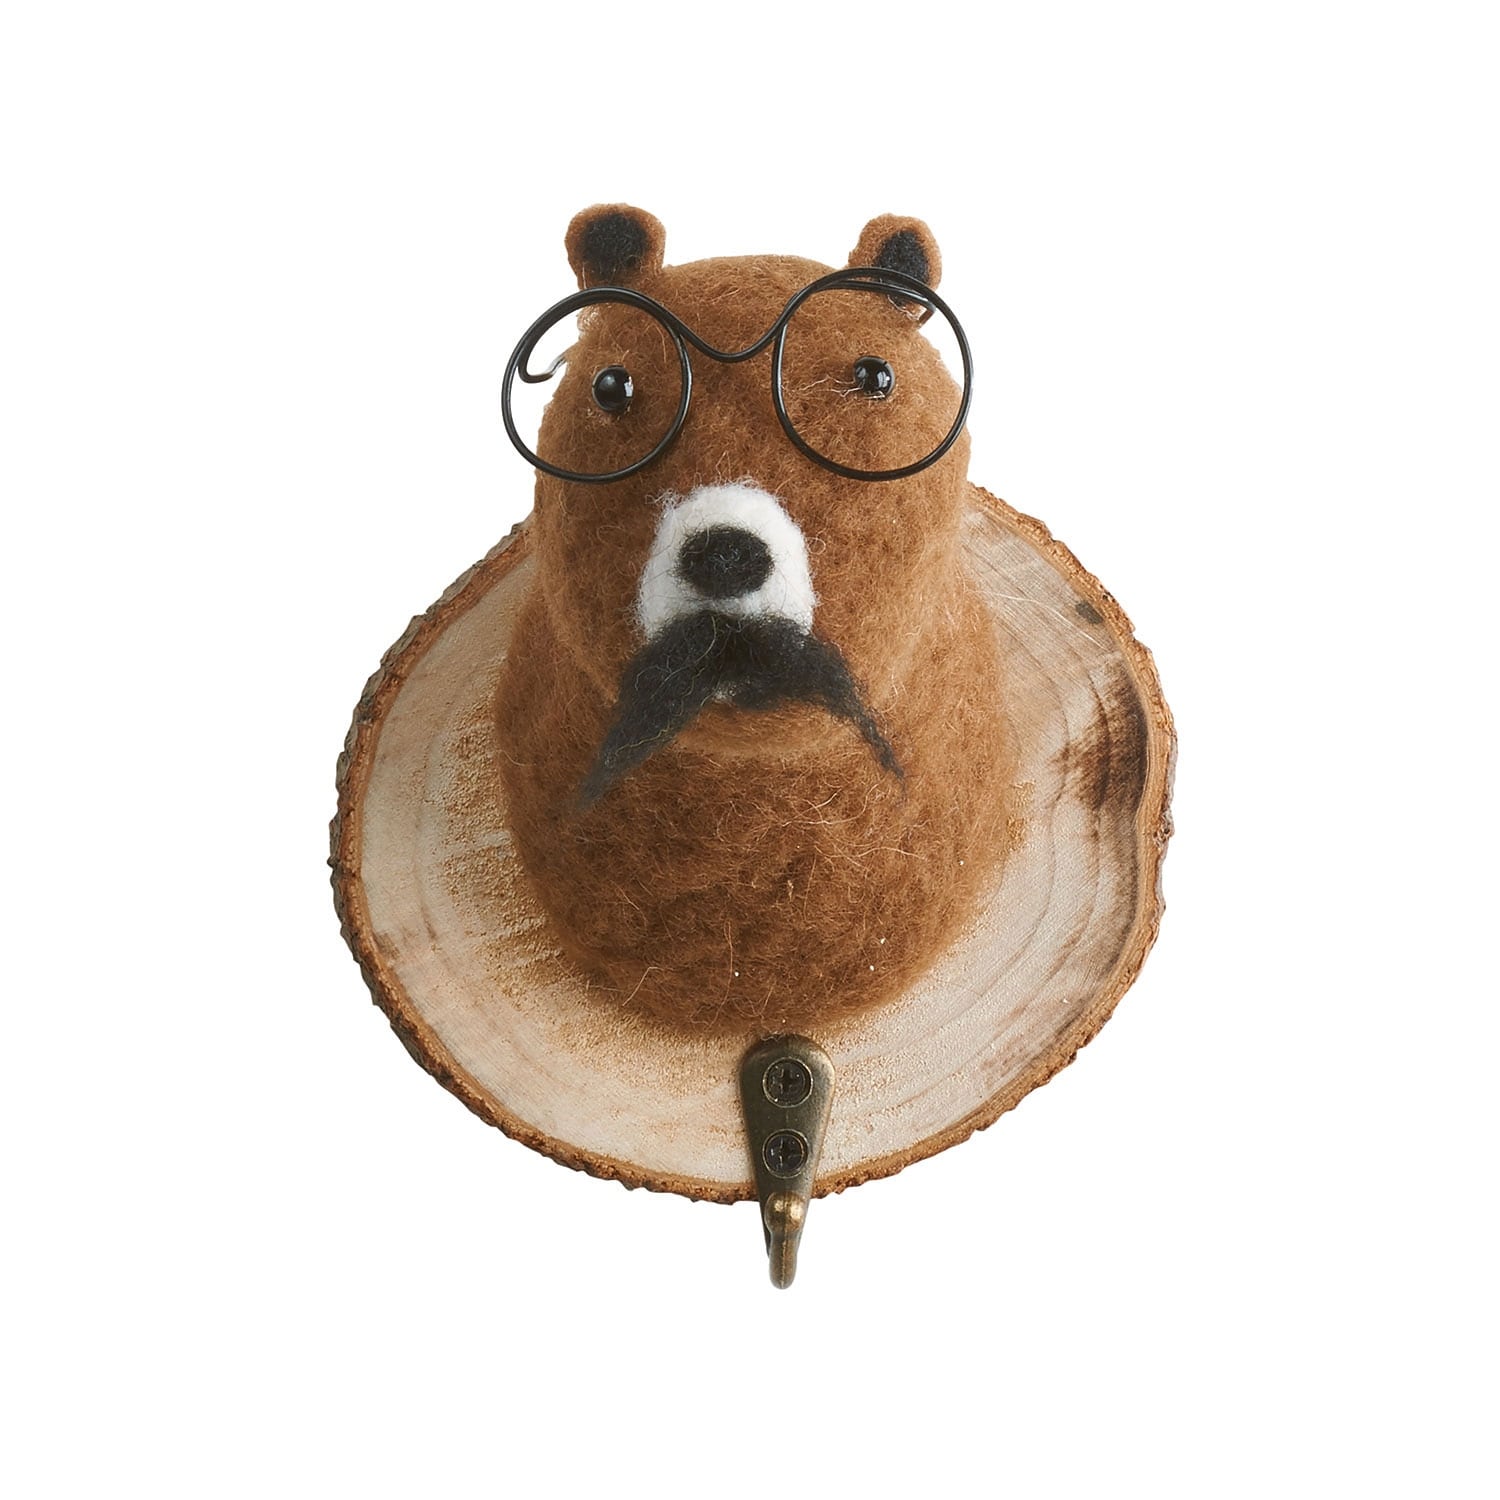 Felted Animal Head Wall Hook - Funny Bear Head in Glasses, Key